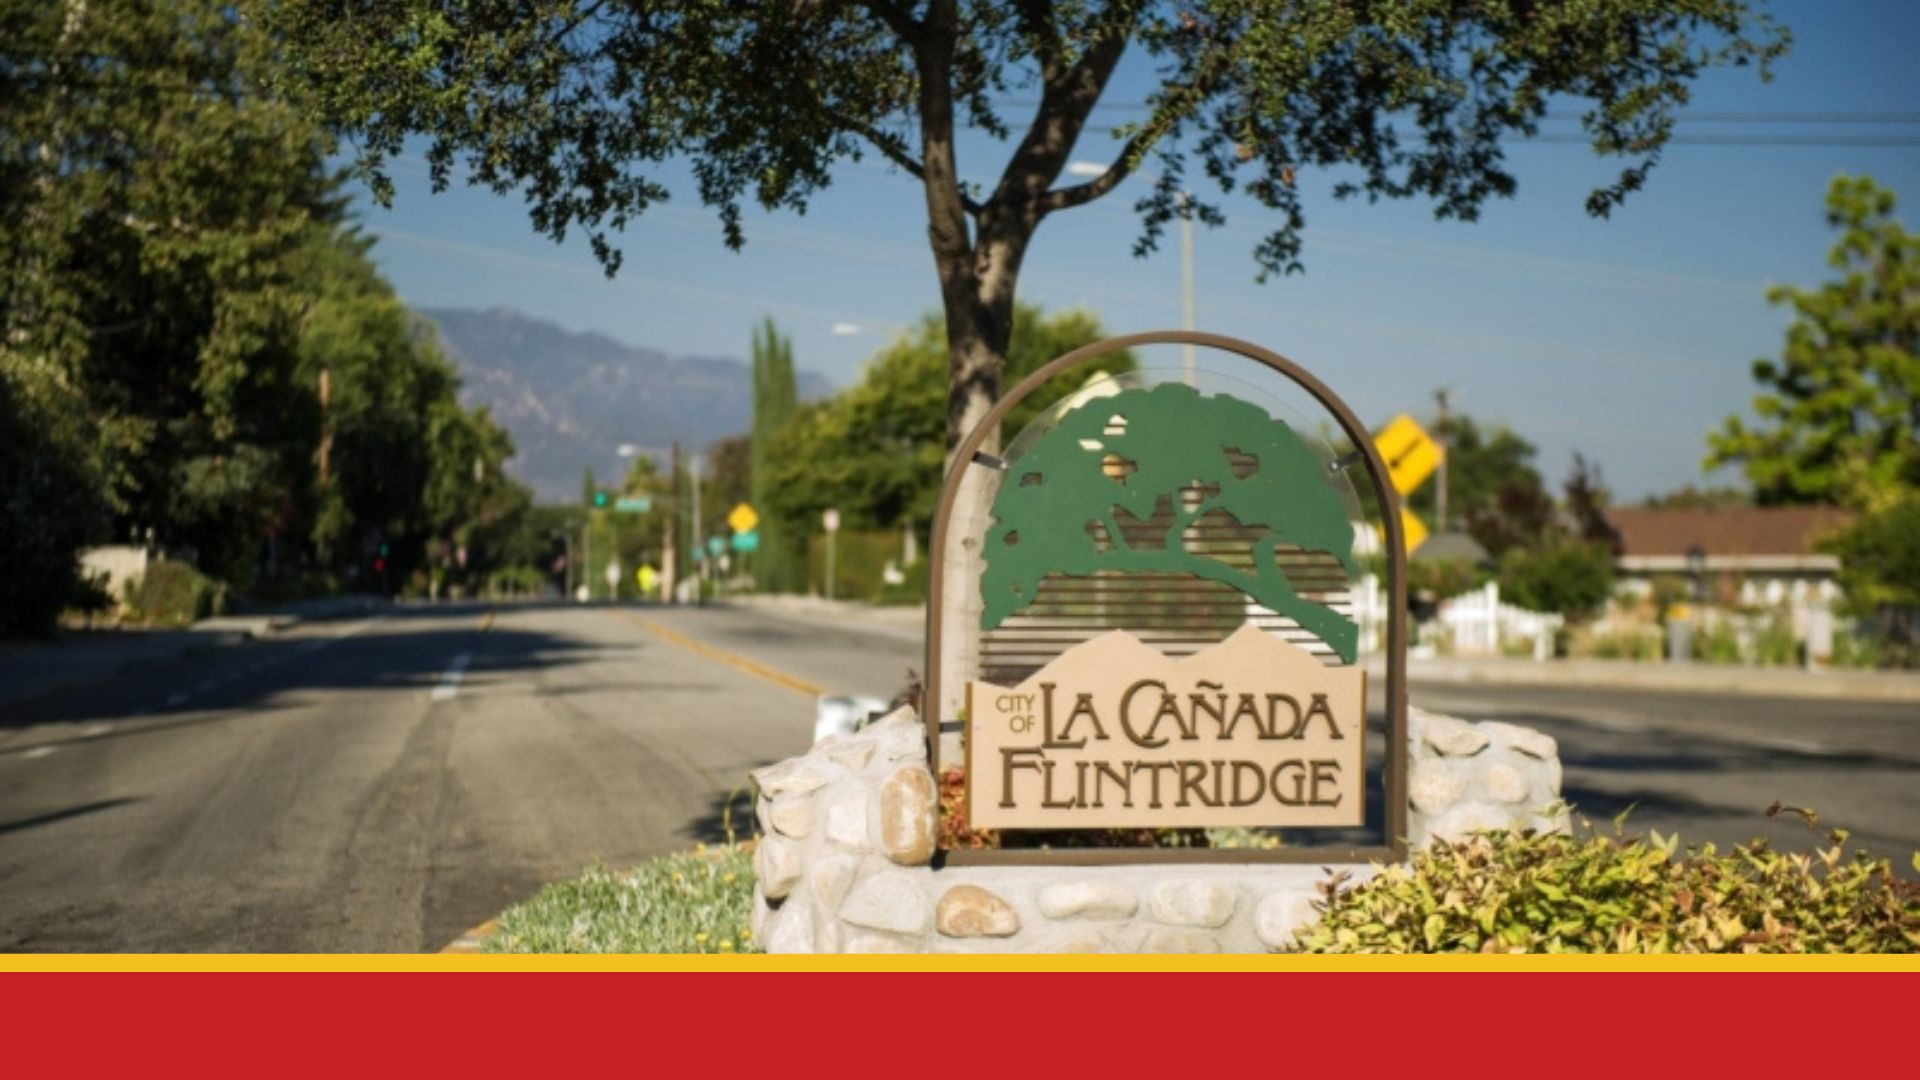 City of La Cañada Flintridge